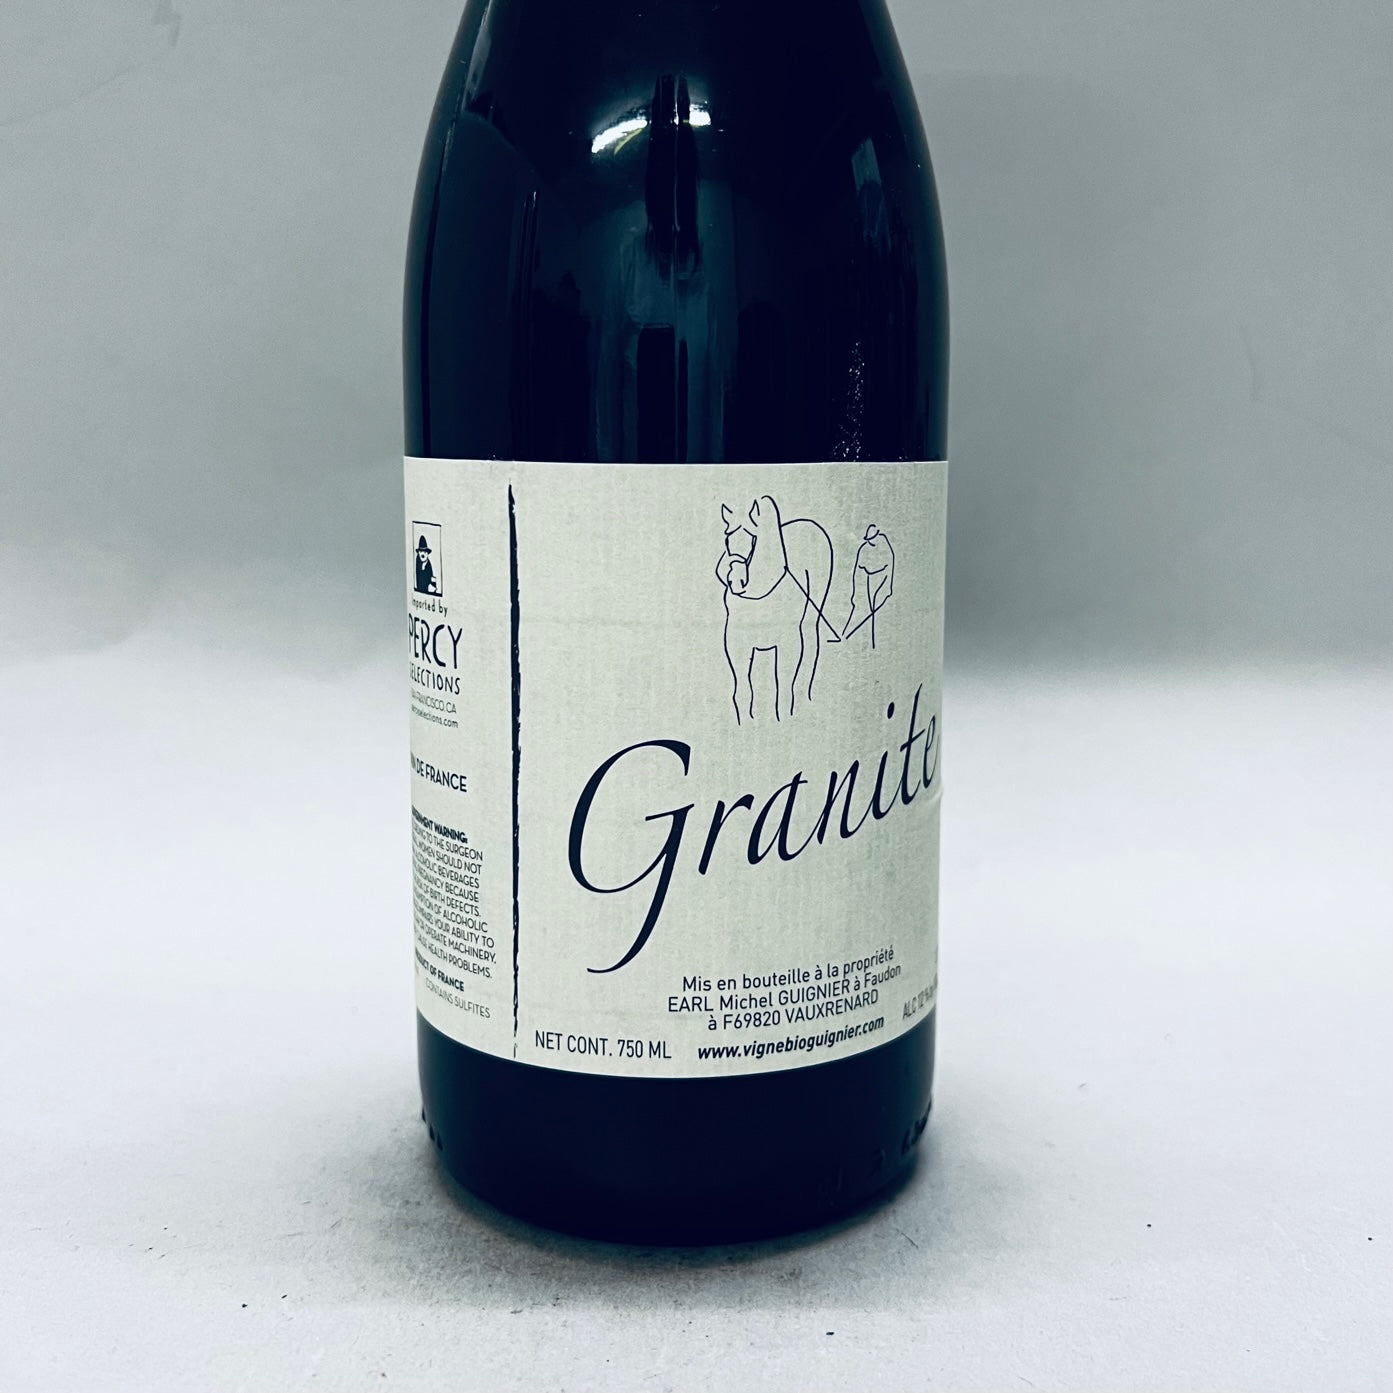 2015 Michel Guignier Granite Beaujolais